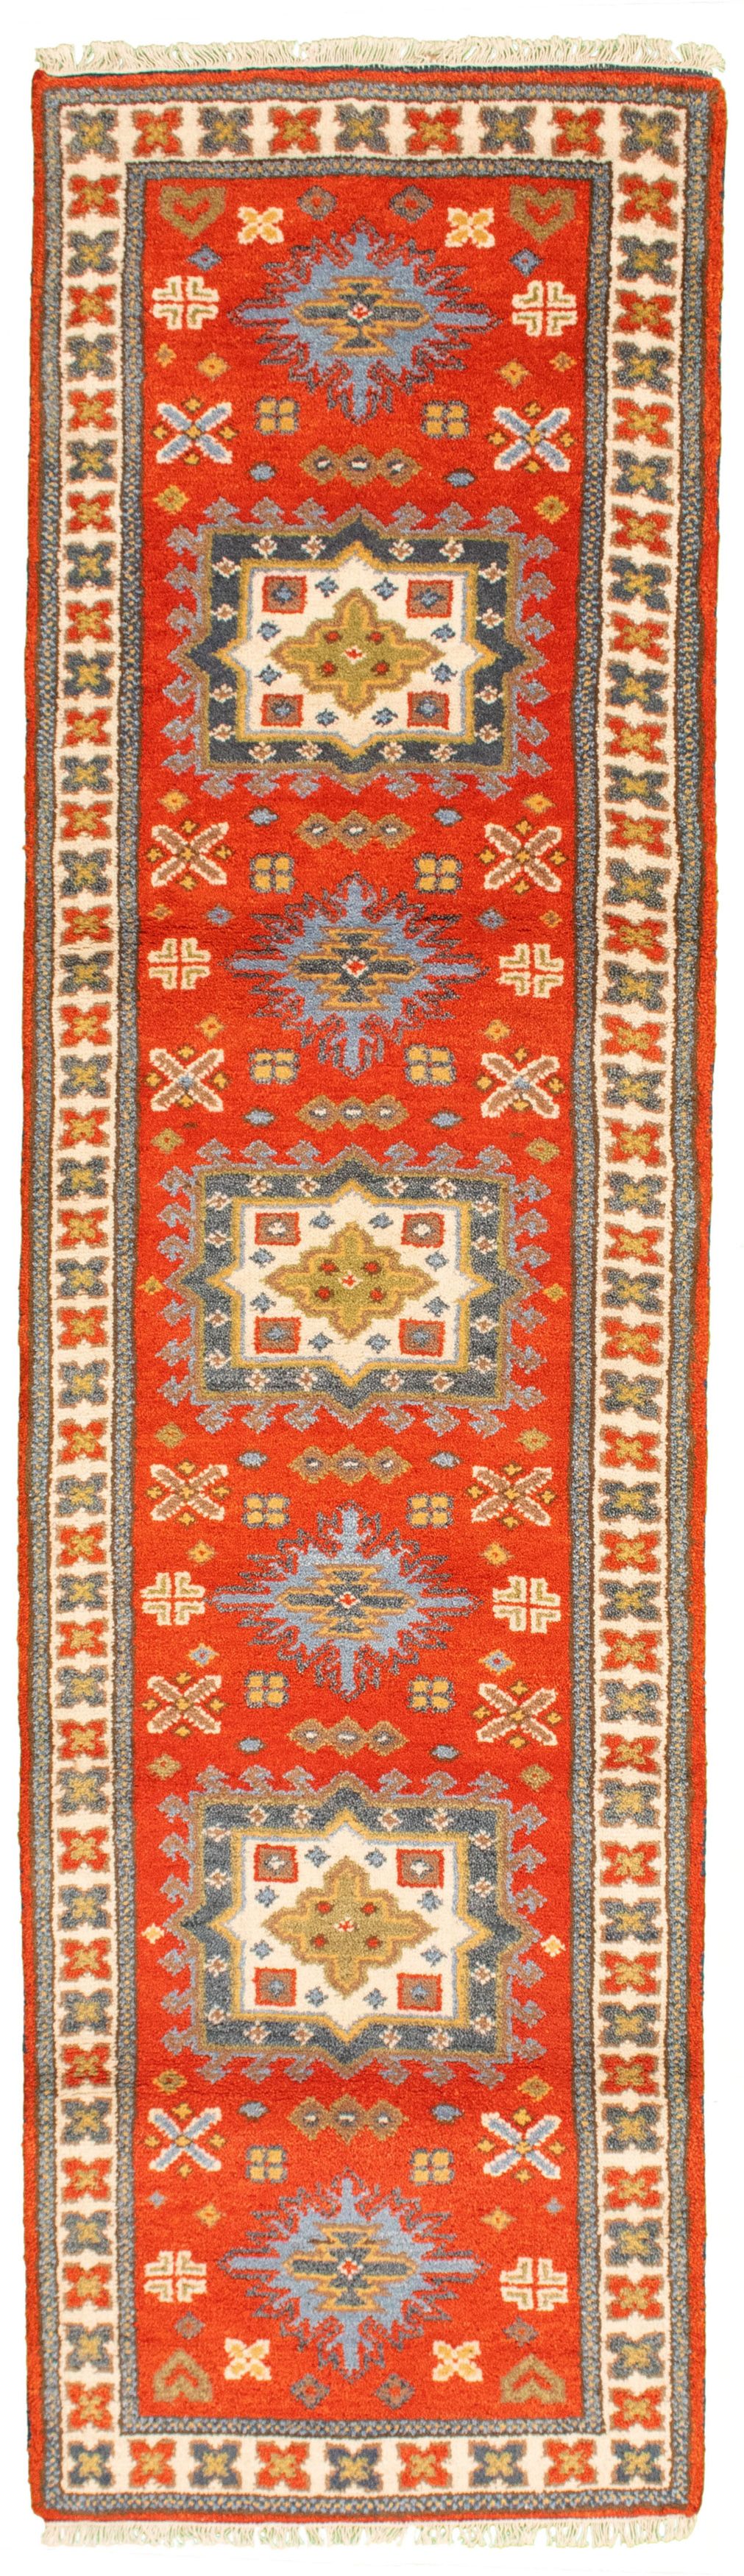 Hand-knotted Royal Kazak Dark Copper Wool Rug 2'8" x 9'8"  Size: 2'8" x 9'8"  